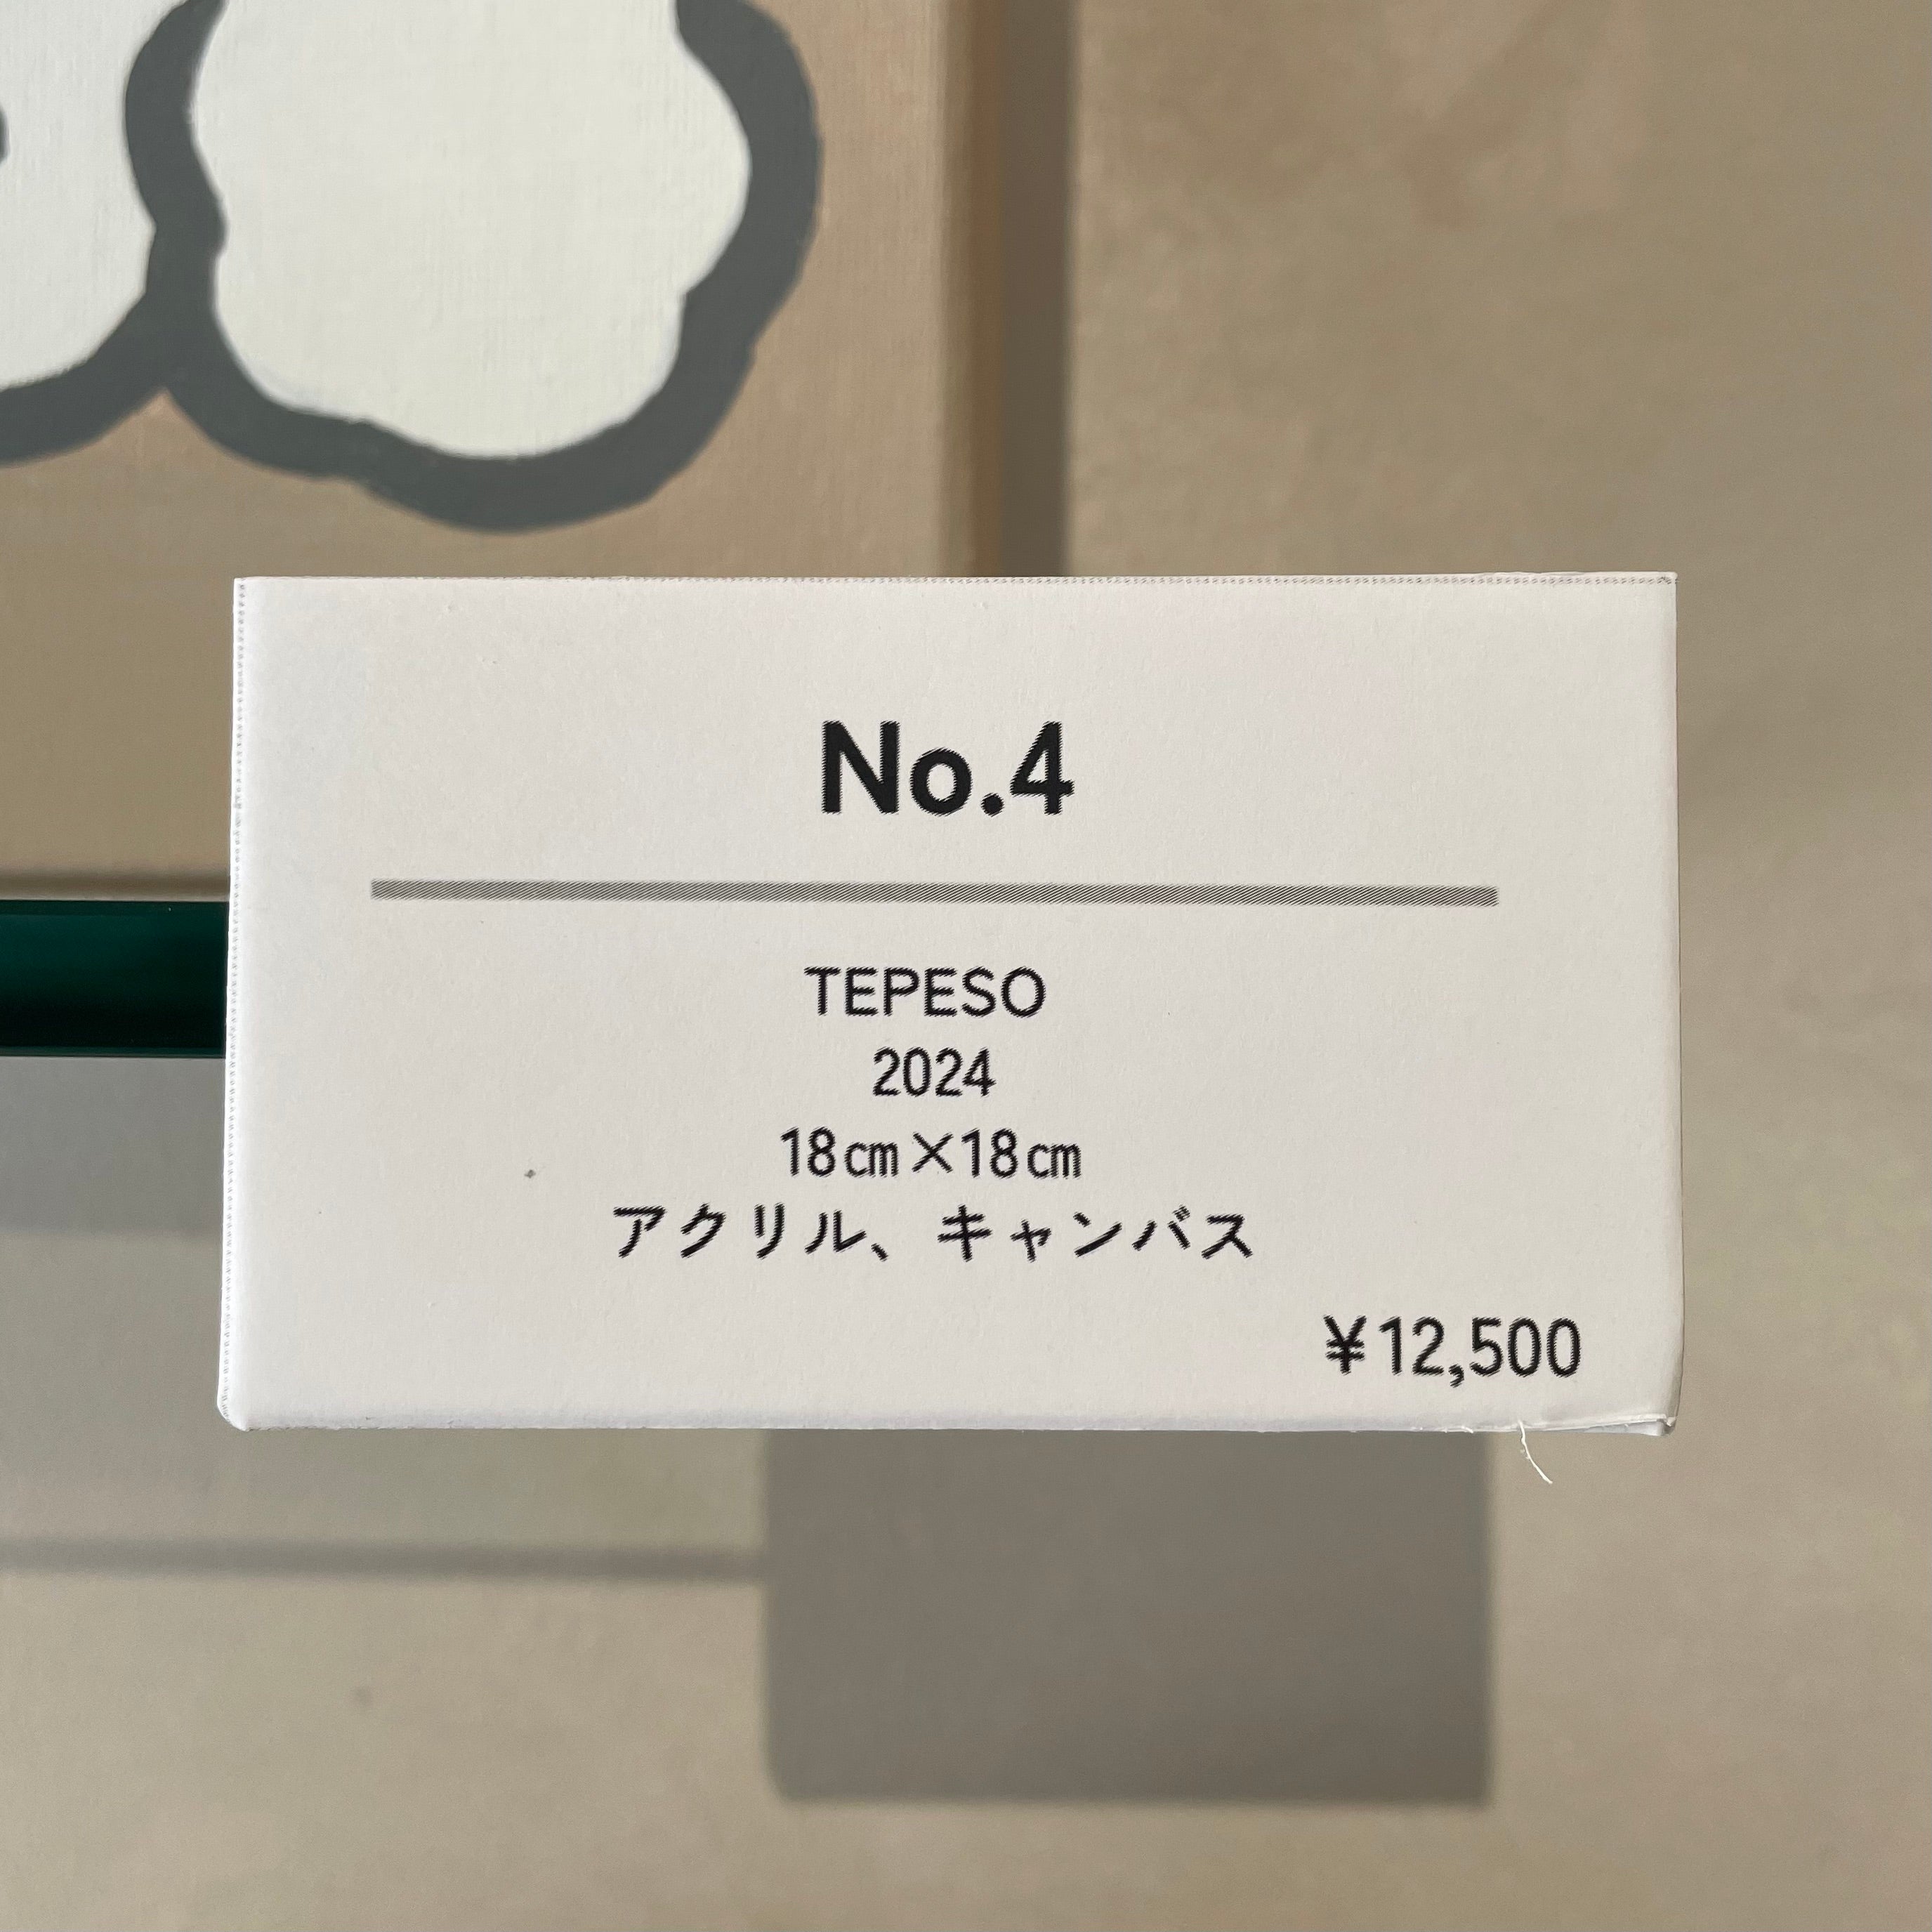 TEPESO 2024 NO.4